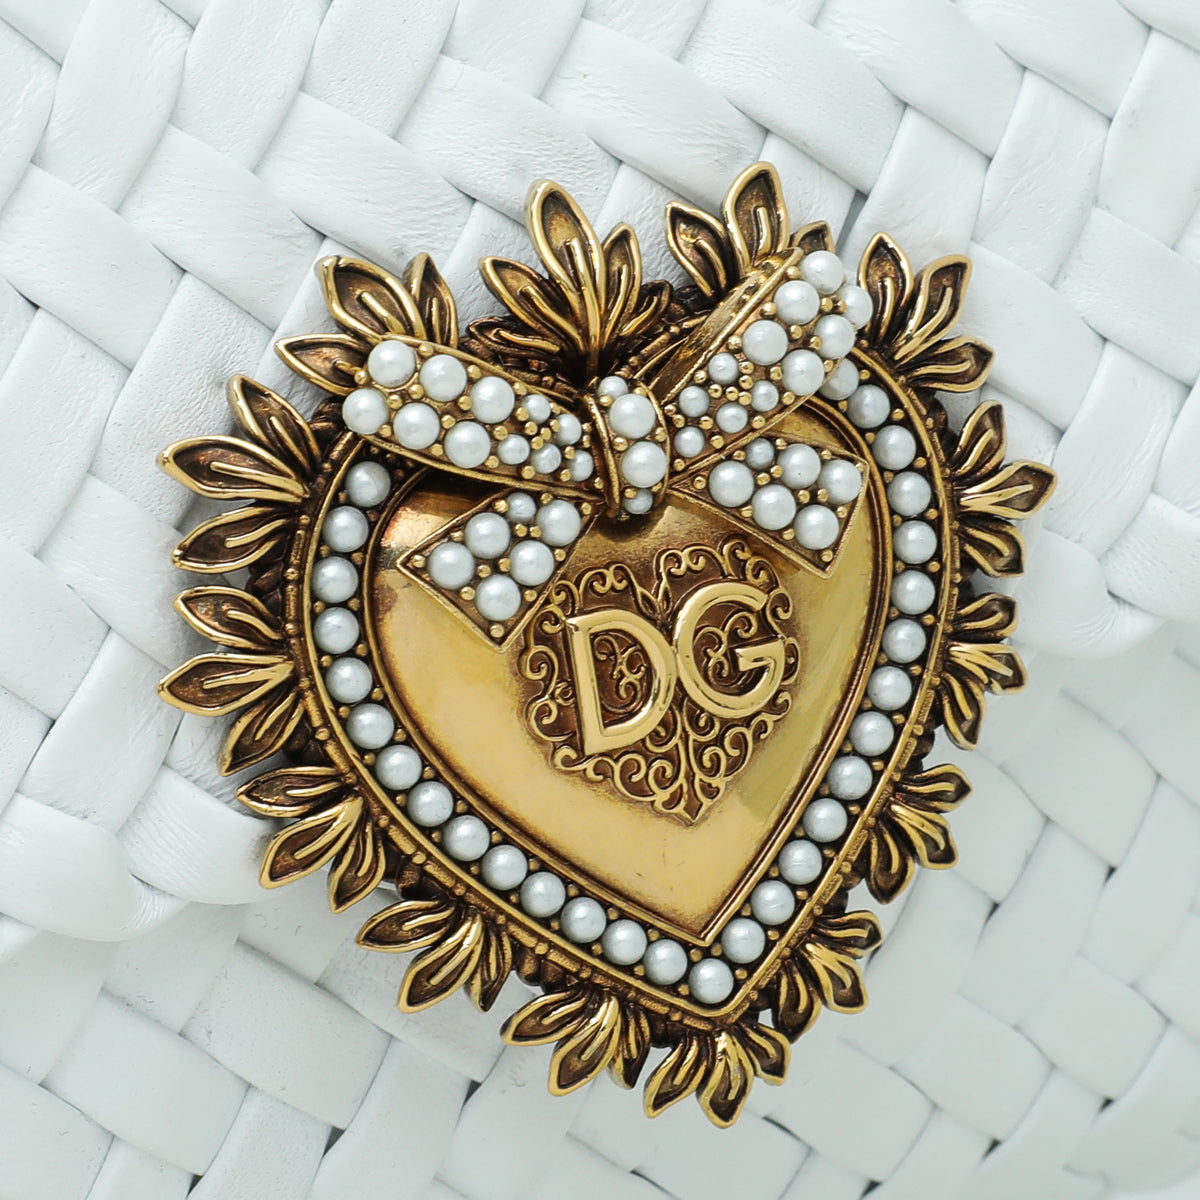 Dolce & Gabbana White Woven Devotion Small Chain Bag